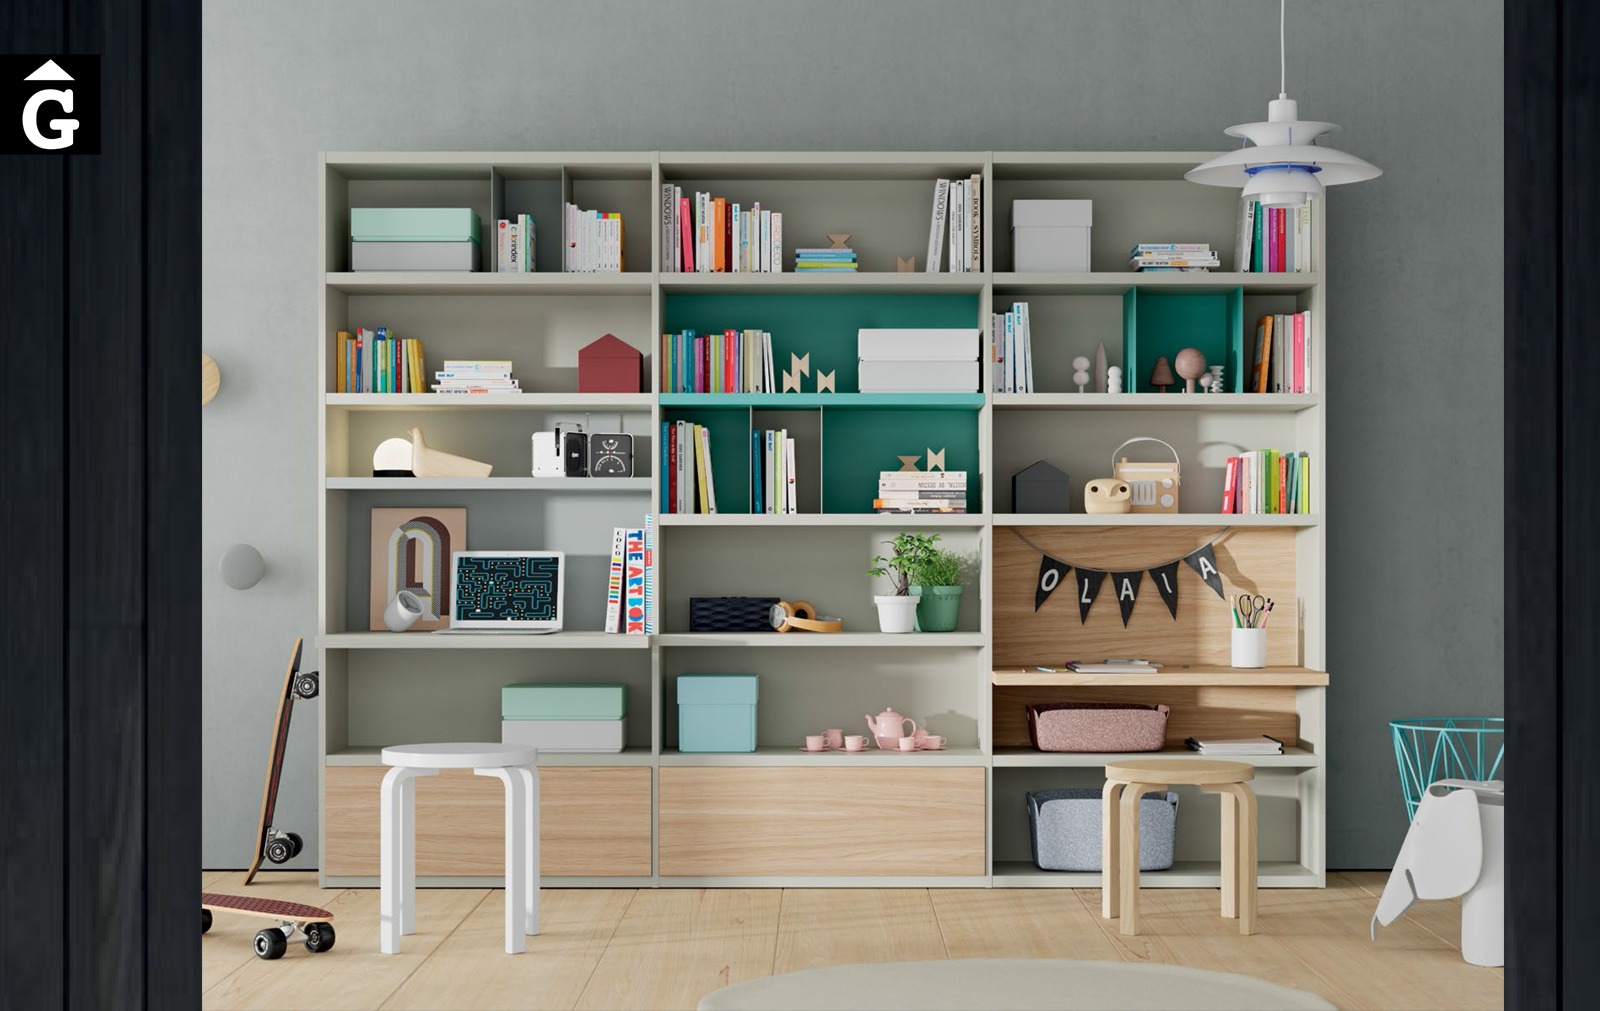 Line moble llibreria infantil ViVe muebles Verge programa llibrera llibreries living by mobles Gifreu